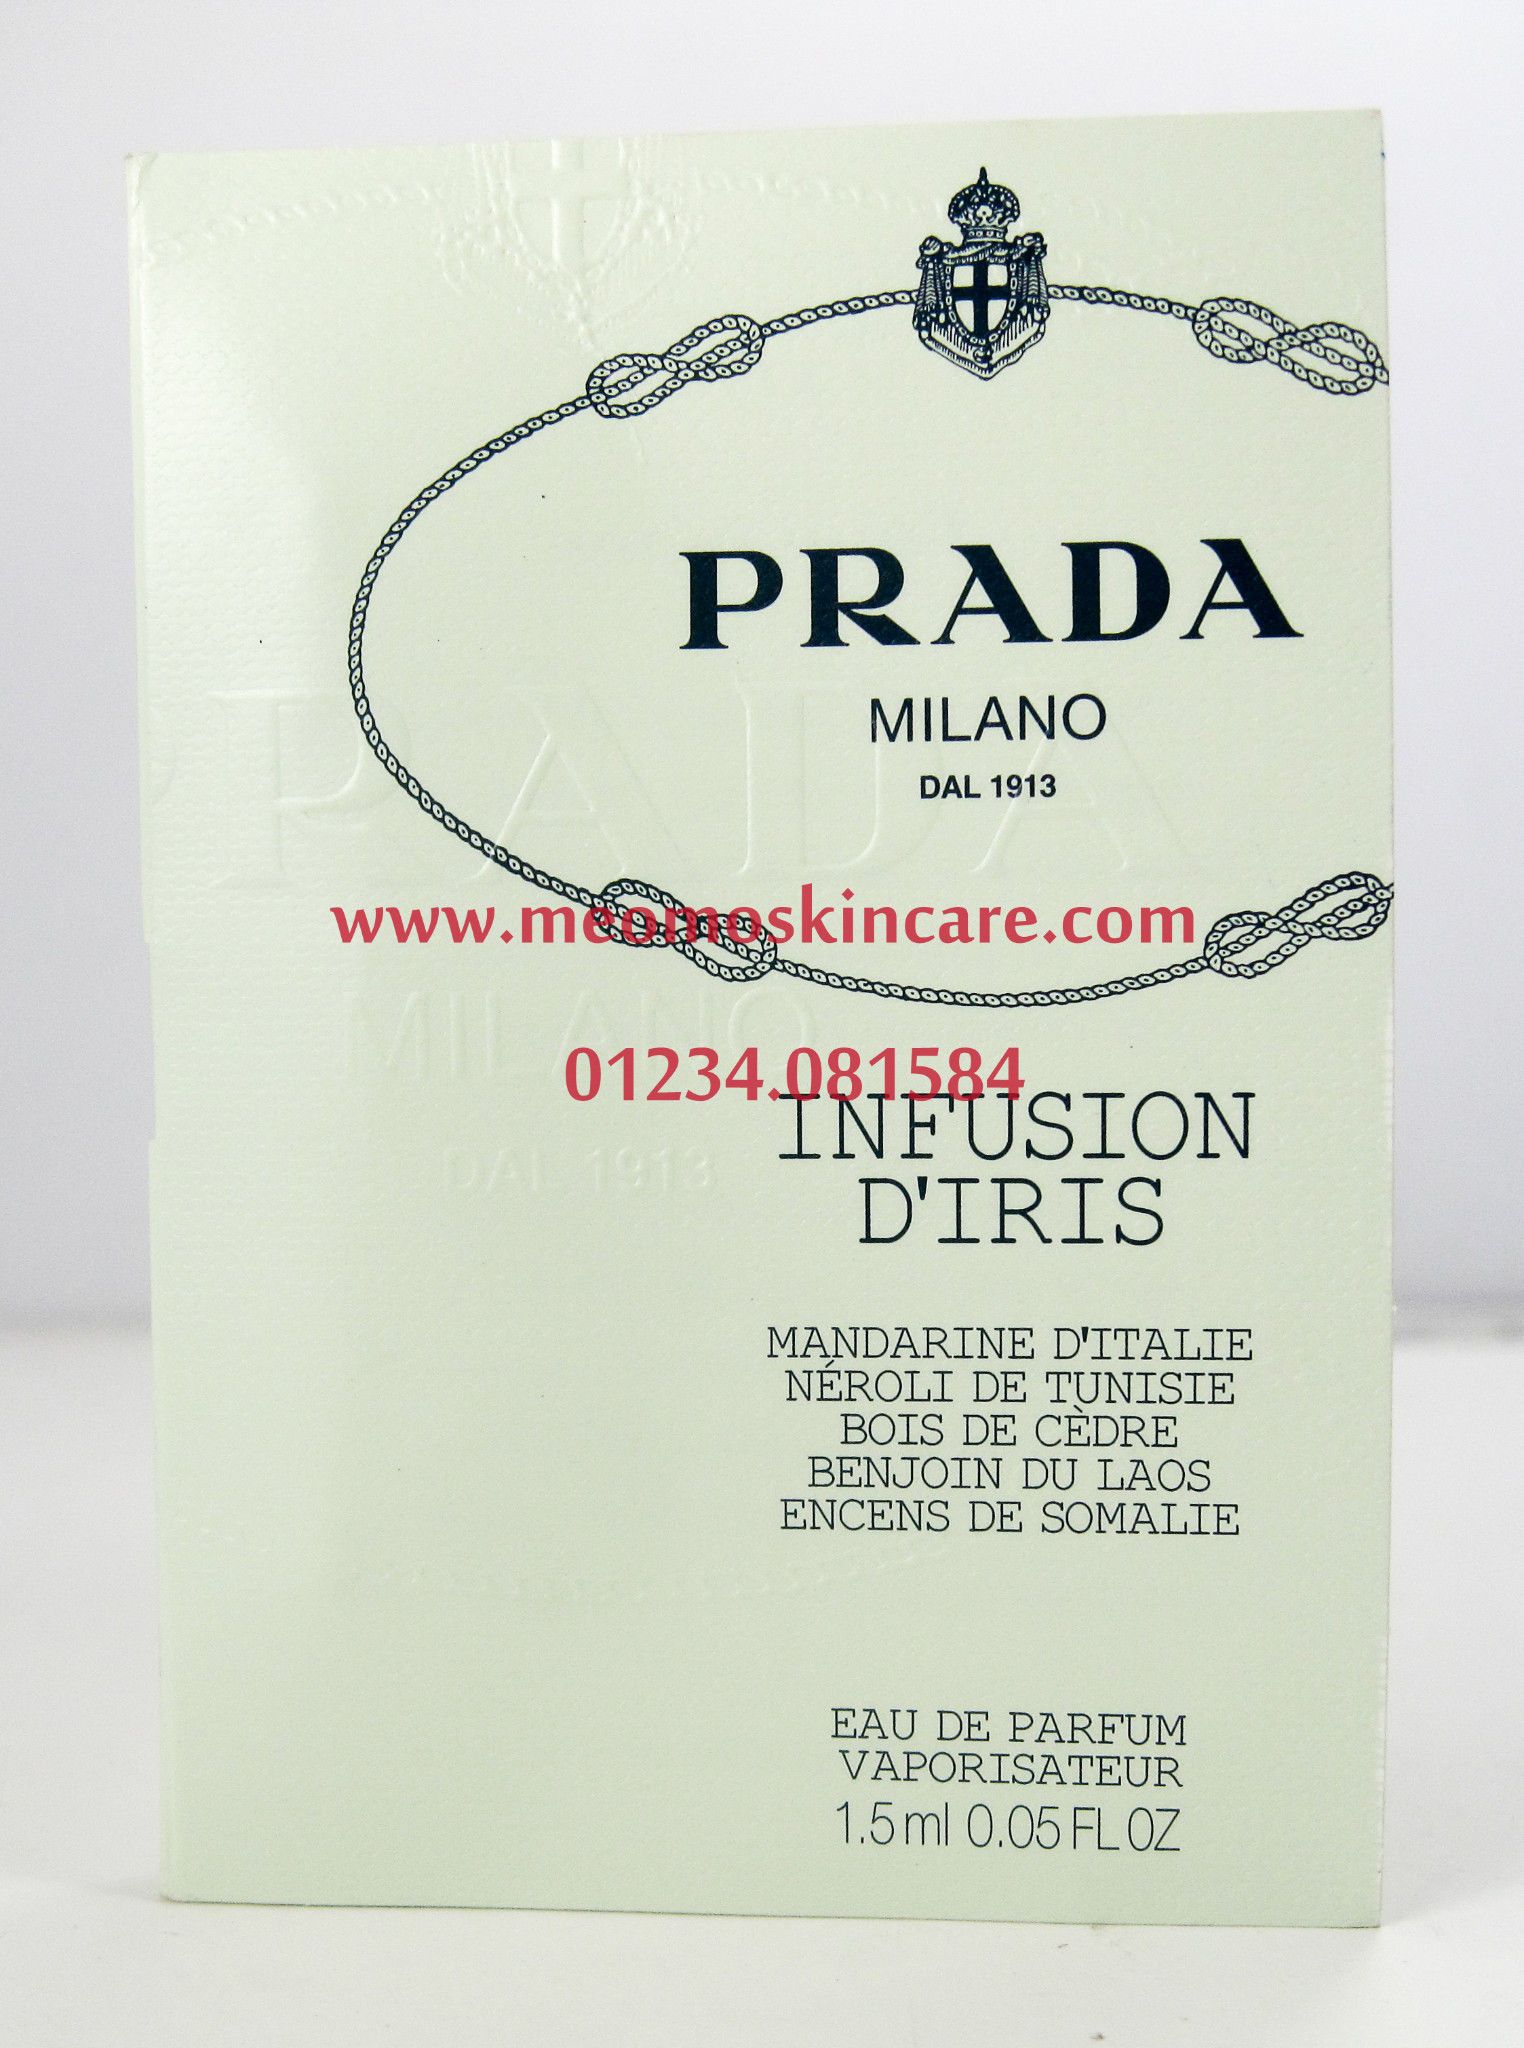 Prada - Milano Infusion D'iris - 1.5ml